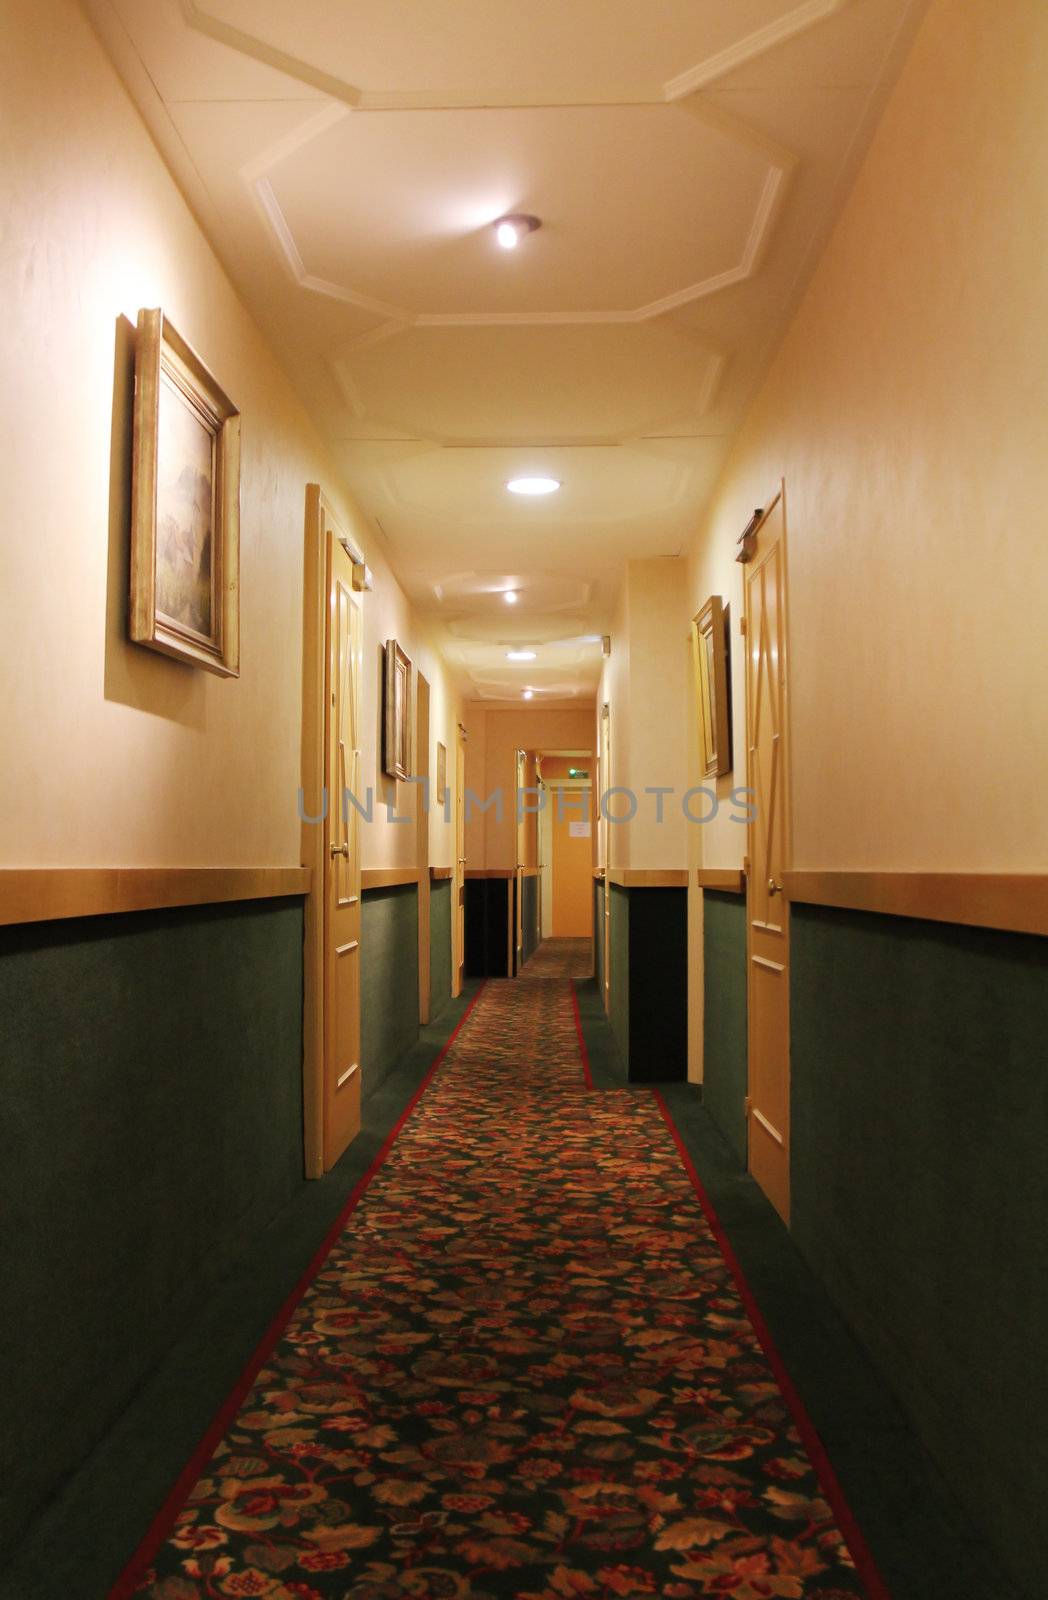 hotel corridor by Hasenonkel